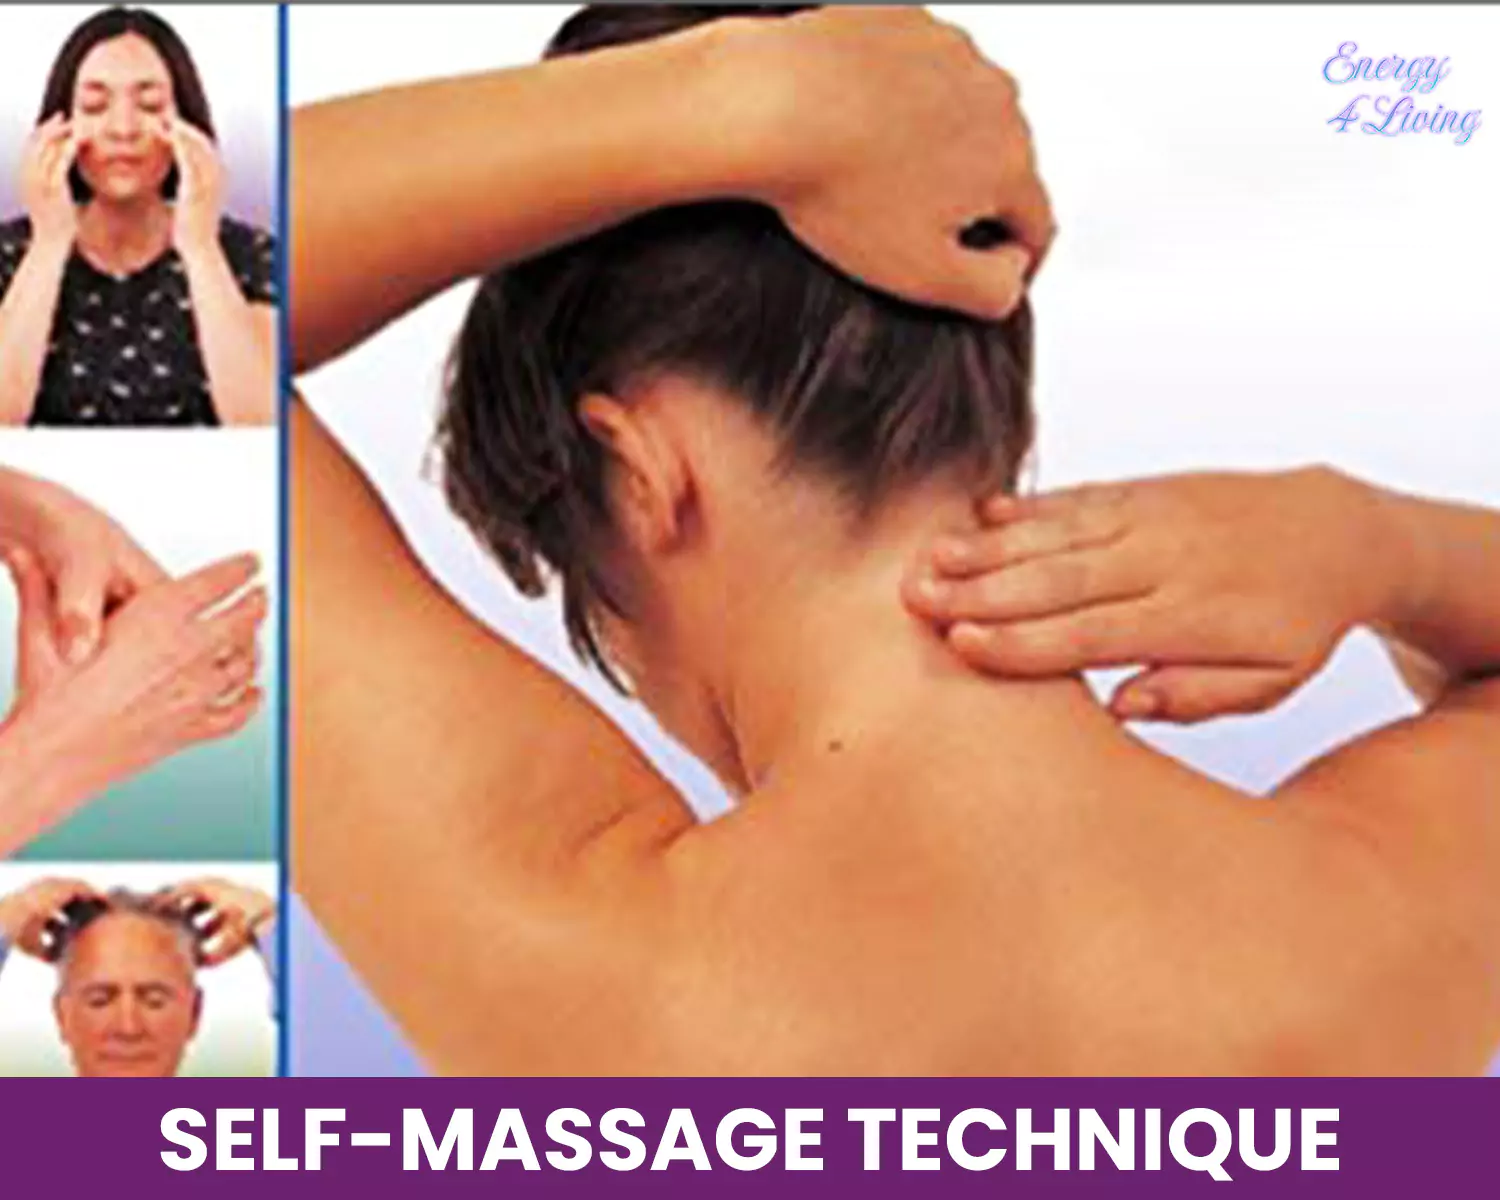 Self-Massage Technique